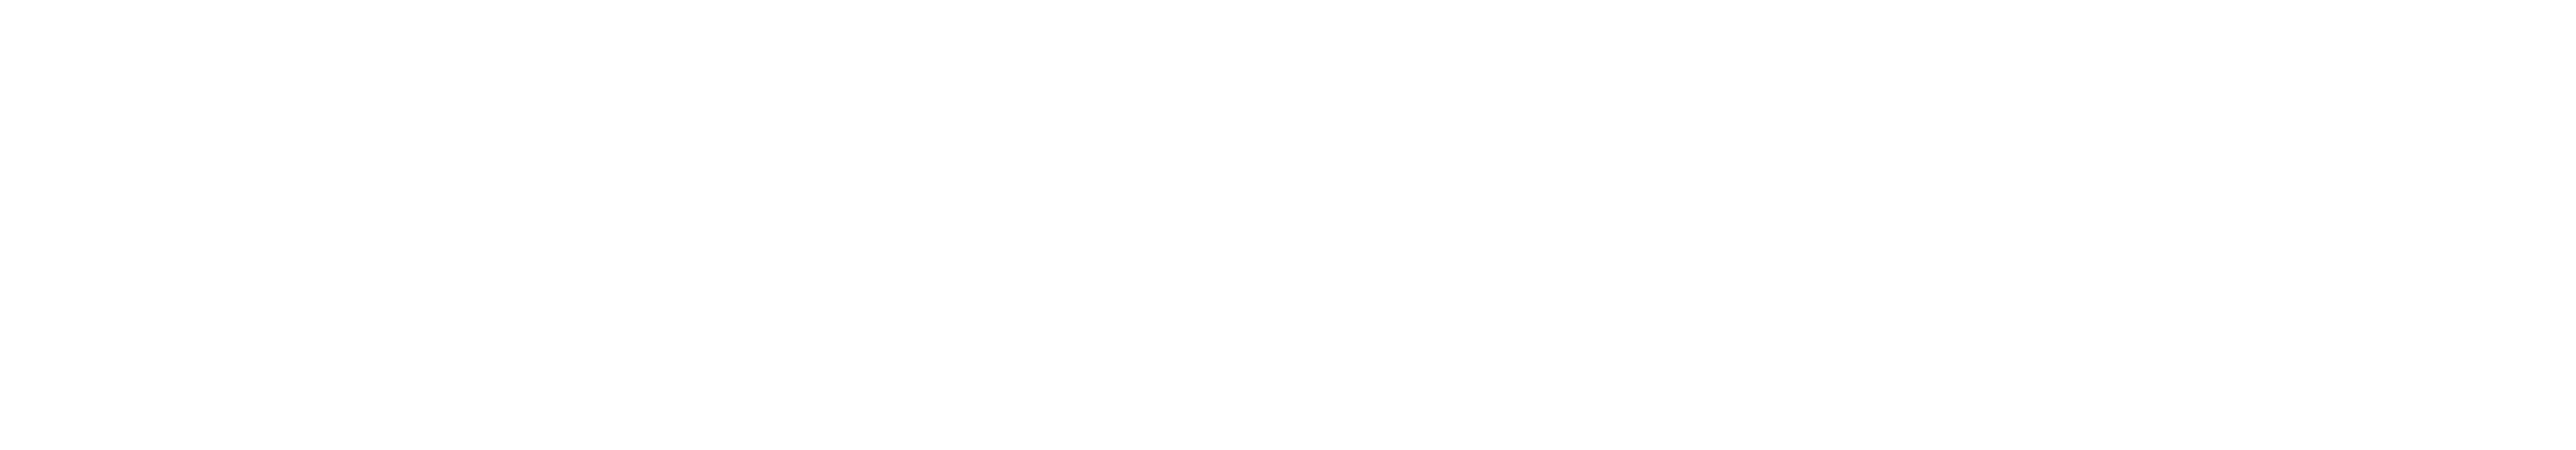 Corporate logotype